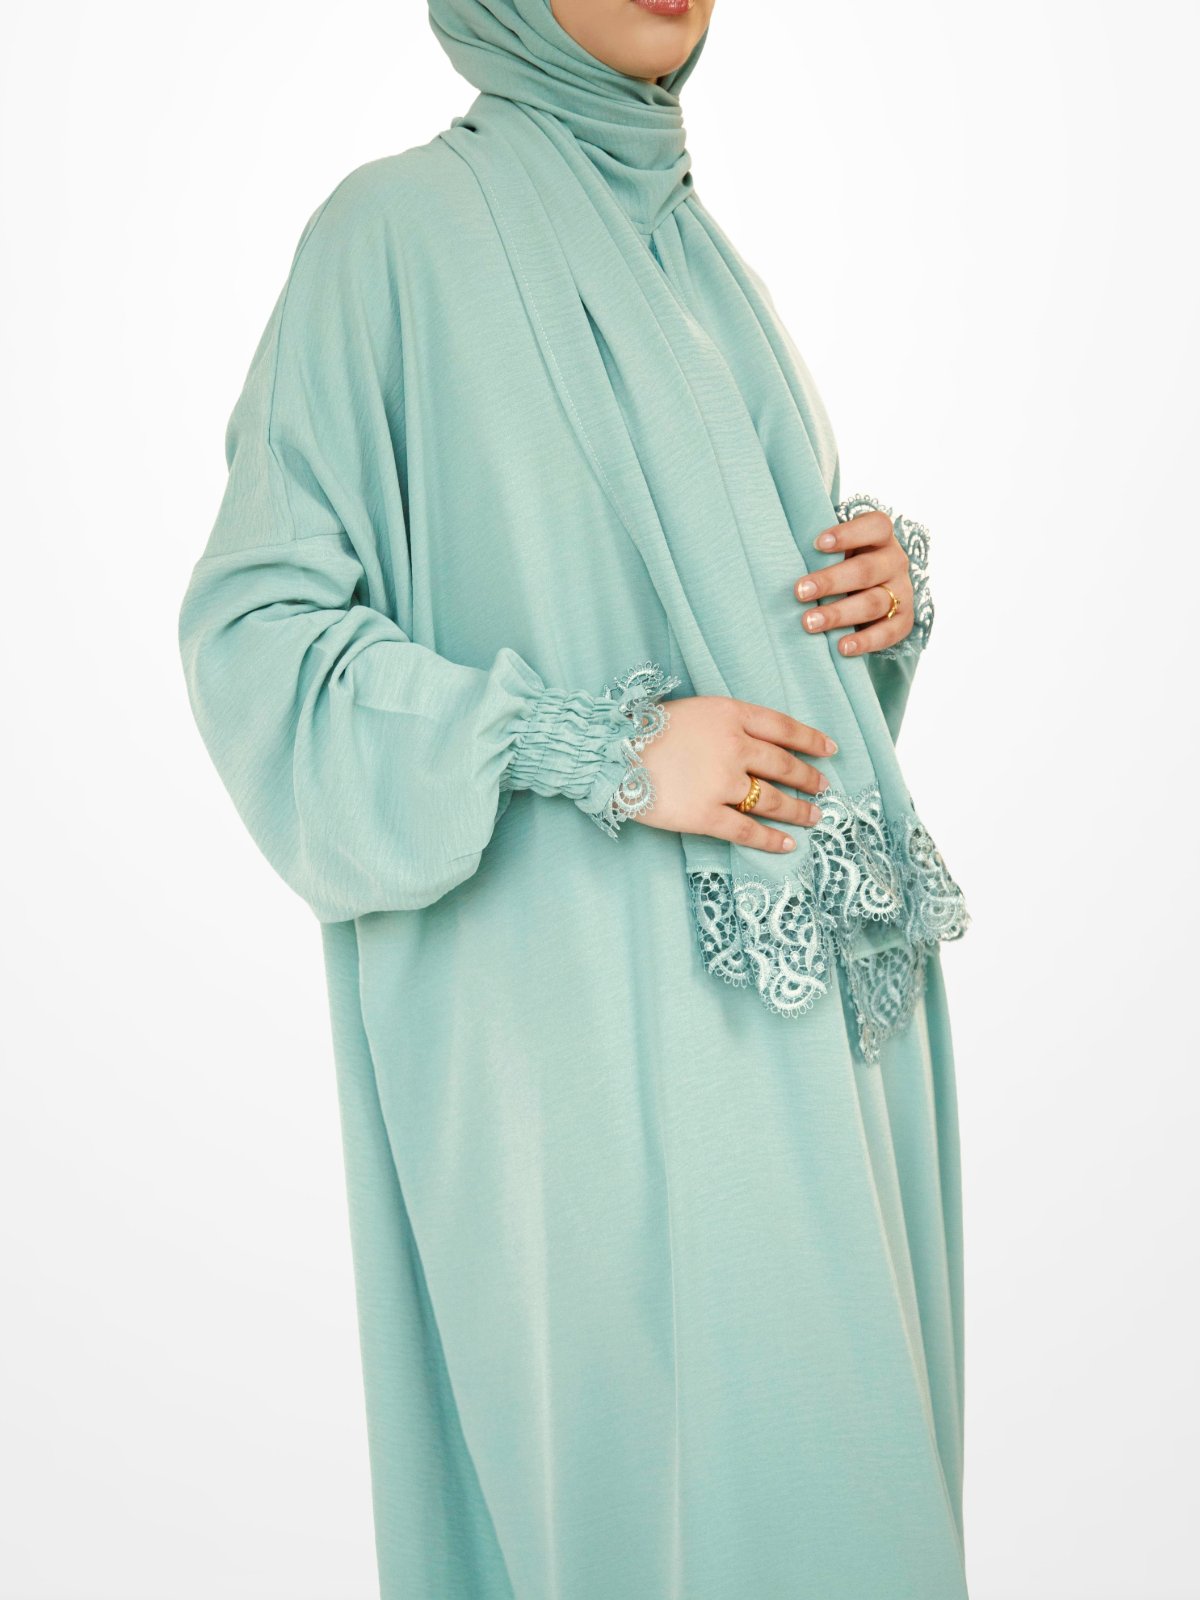 One-Piece Prayer Dress & Abaya with attached Hijab - Plain - Modest Essence